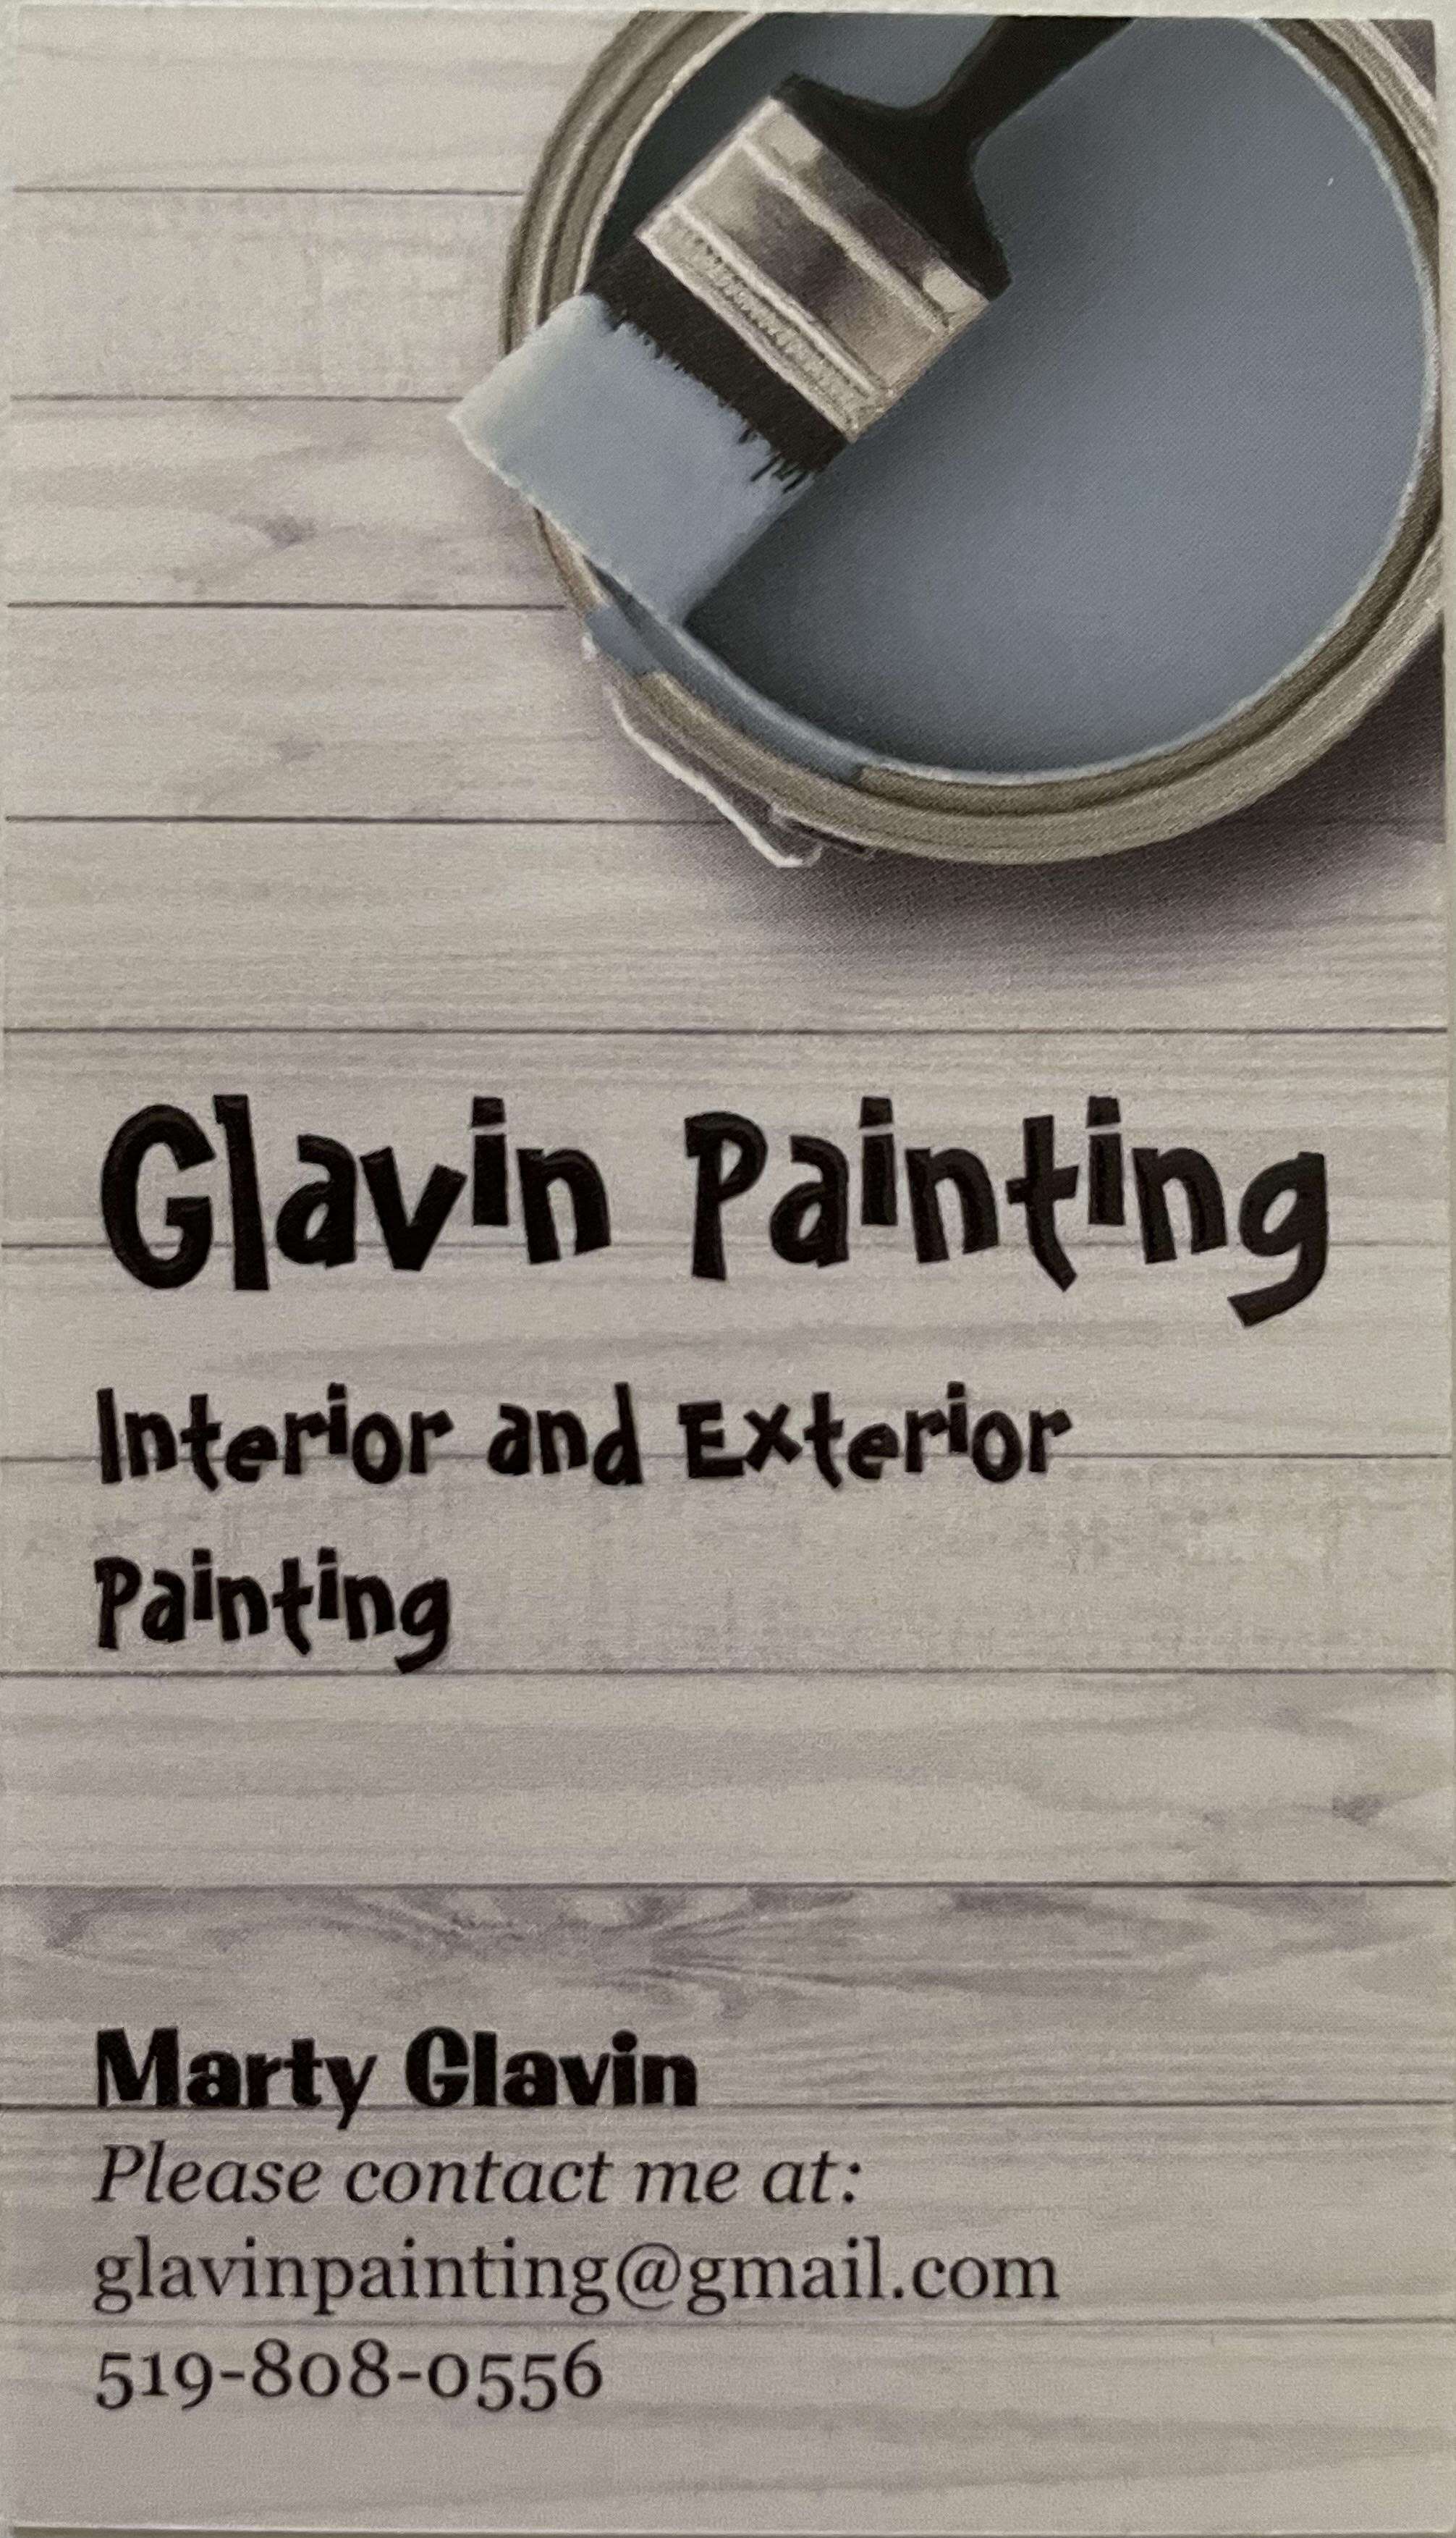 Glavin Painting